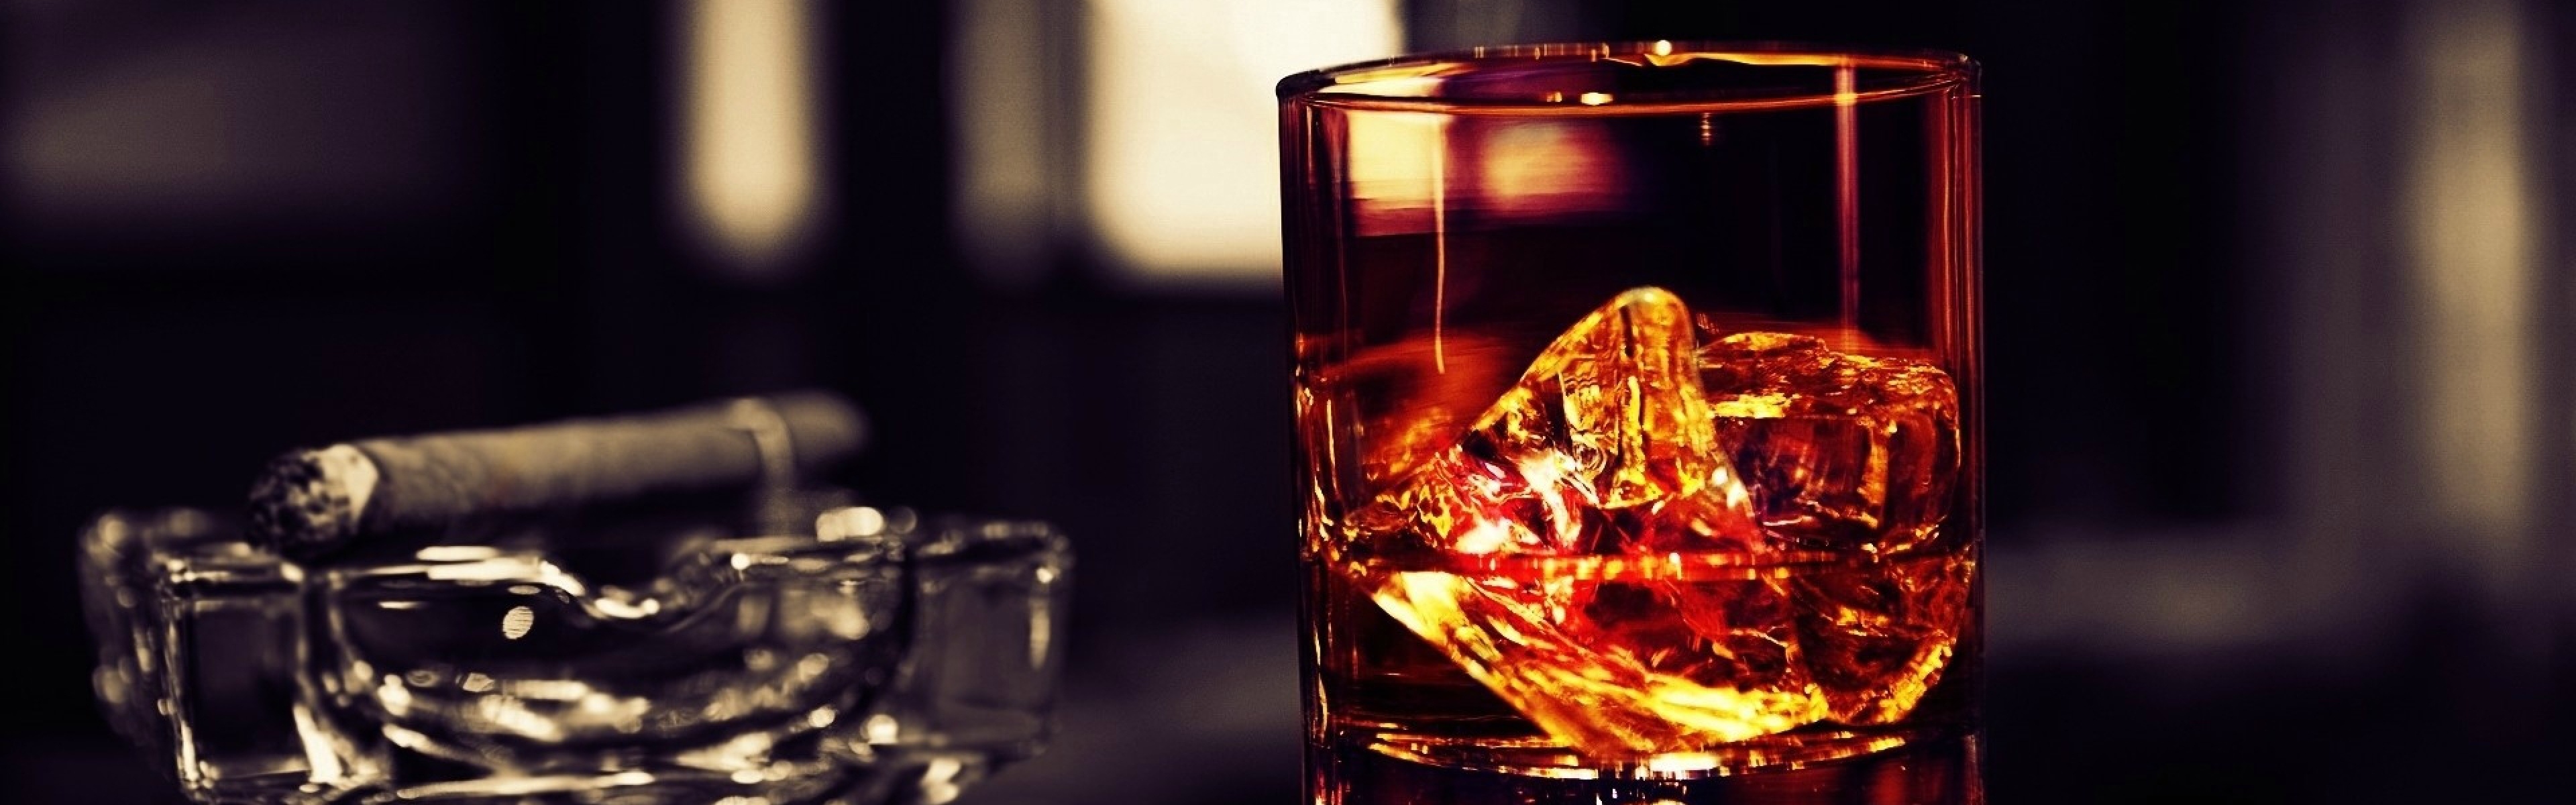 sigari-whisky-abbinamento1